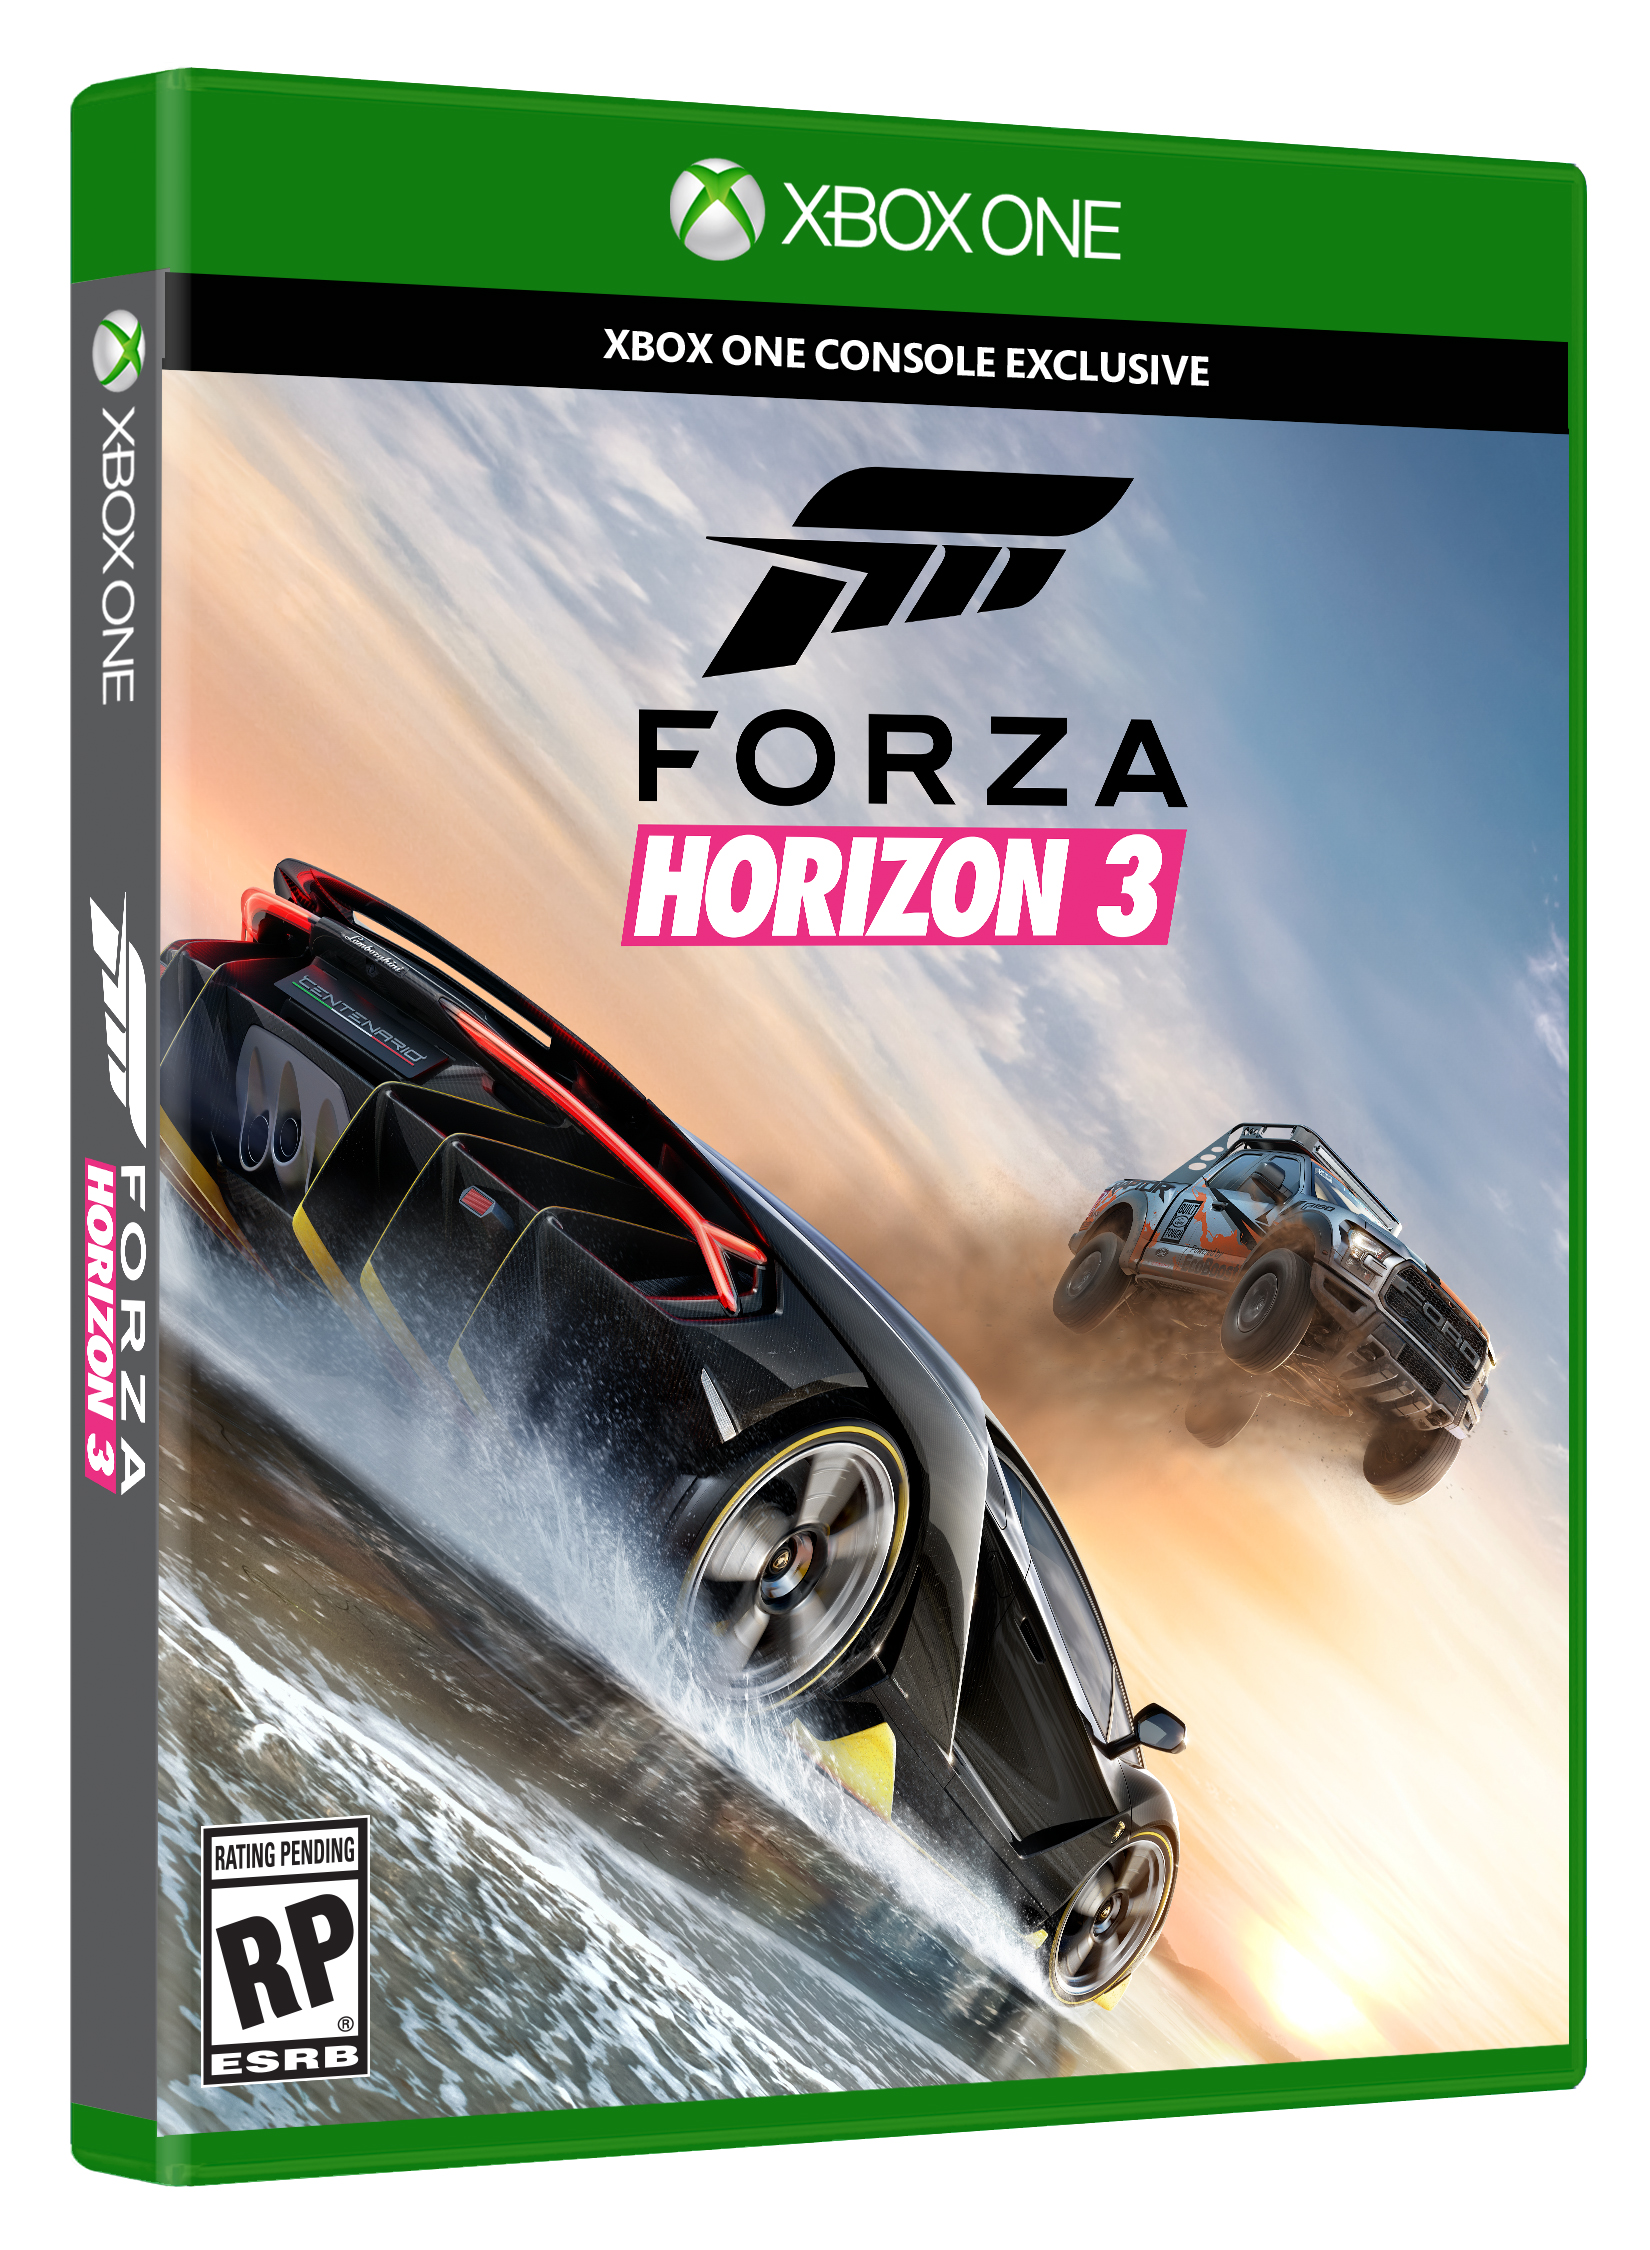 Forza Horizon 3 + Hot Wheels Cd Key GLOBAL Xbox One - Windows 10